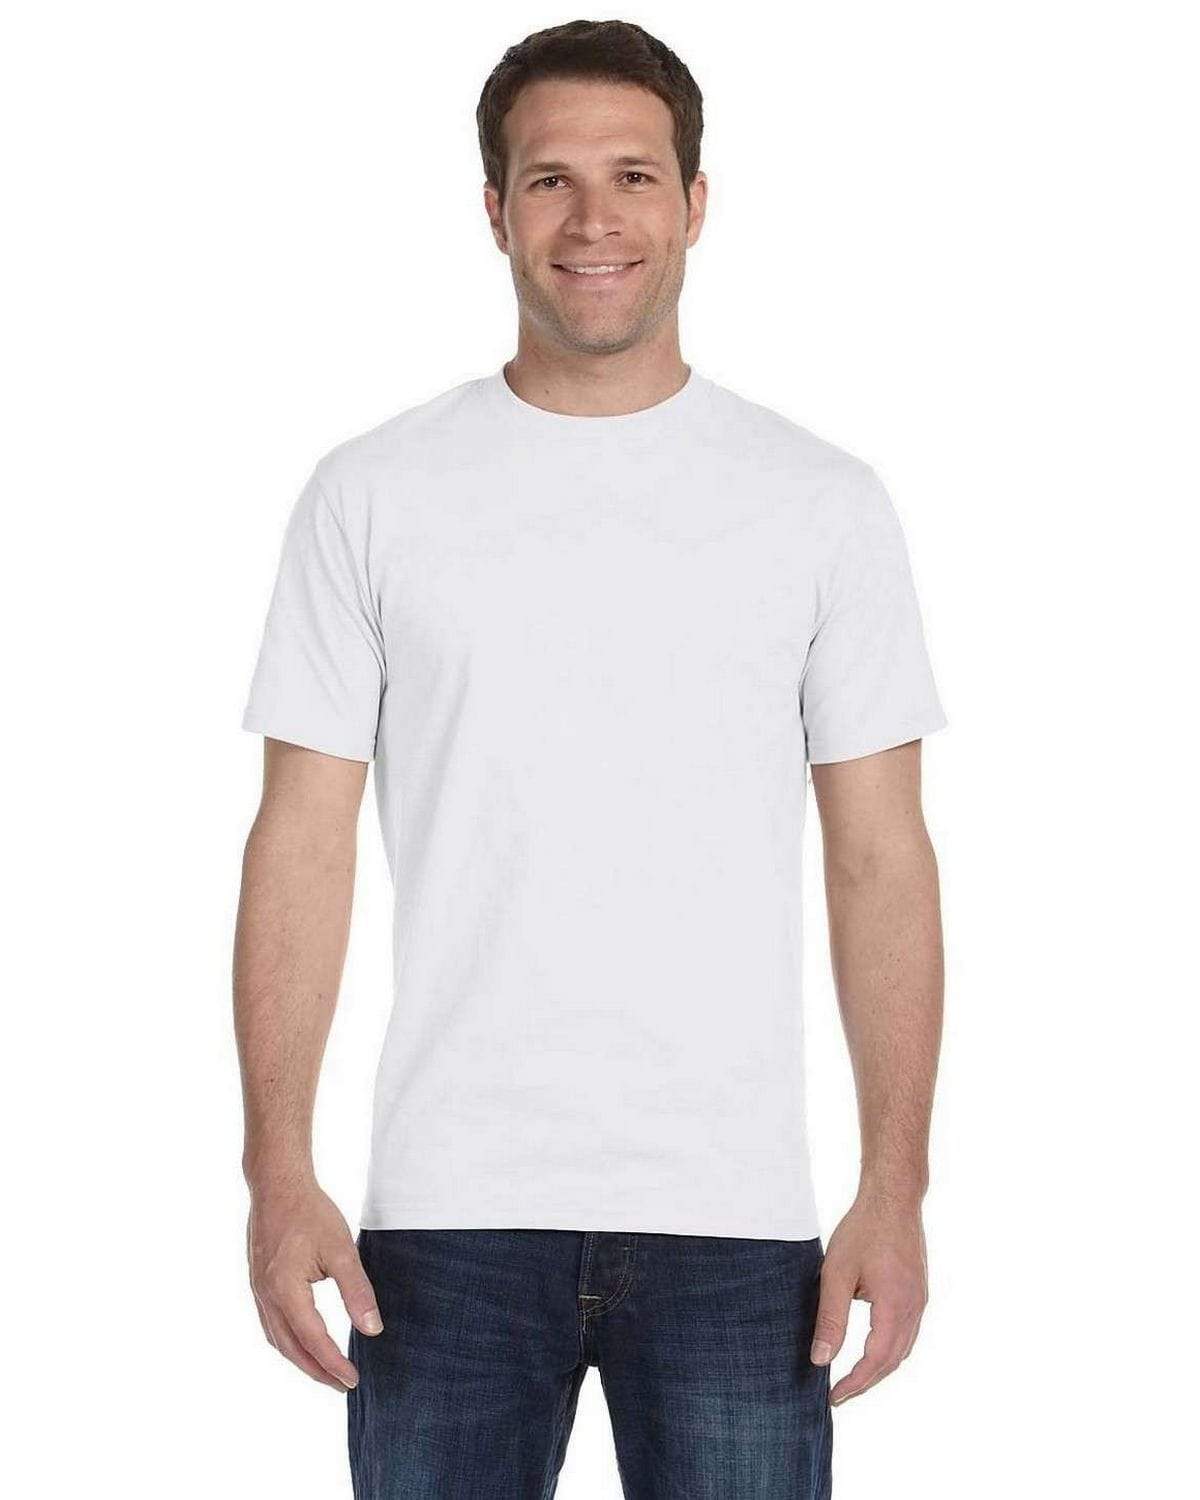 HANES Mens Tops XL / White HANES - Crew Neck T-Shirt